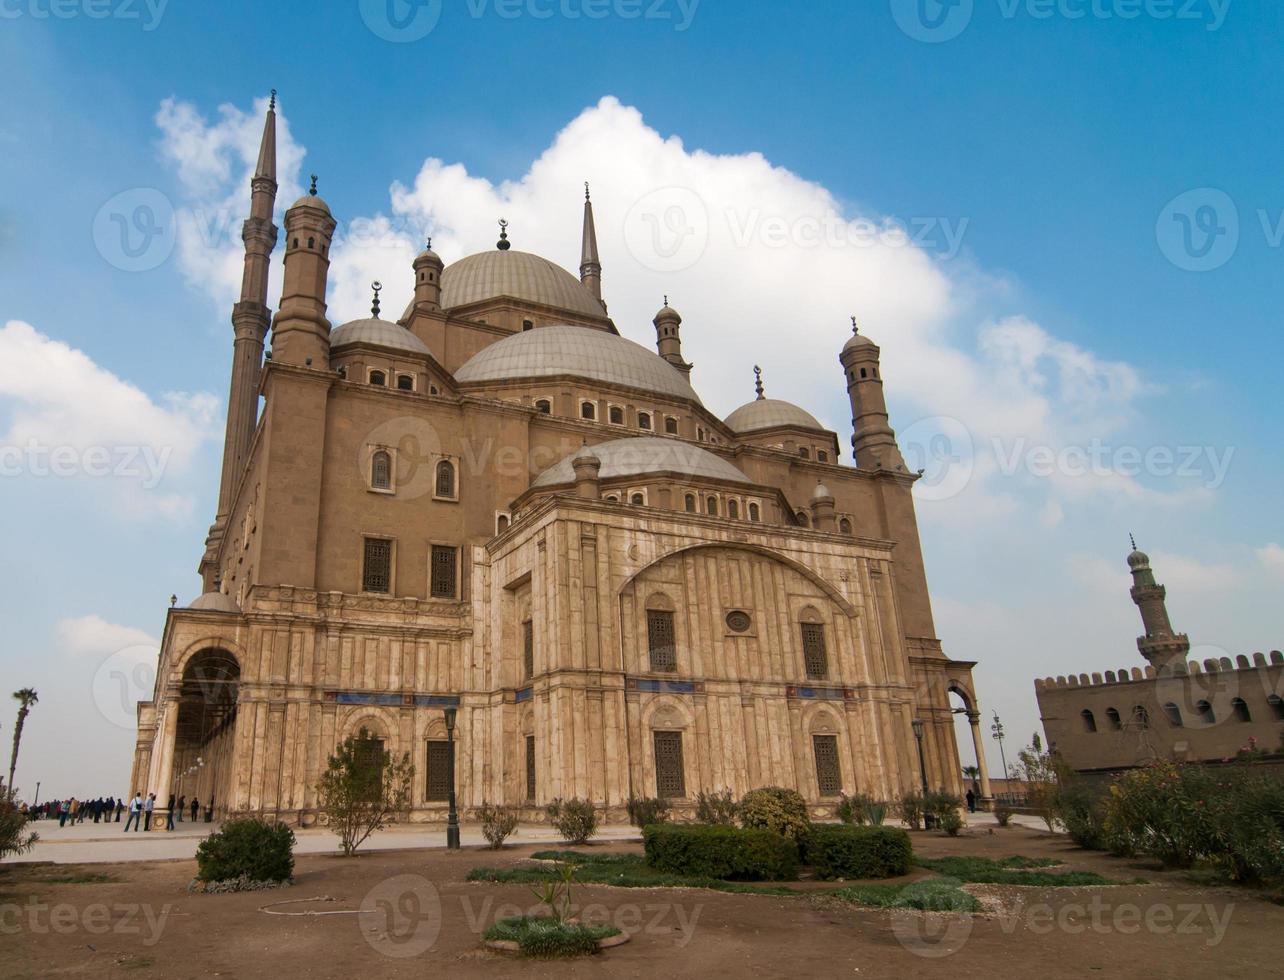 Mohamed Ali Mosque, Saladin Citadel - Cairo, Egypt photo